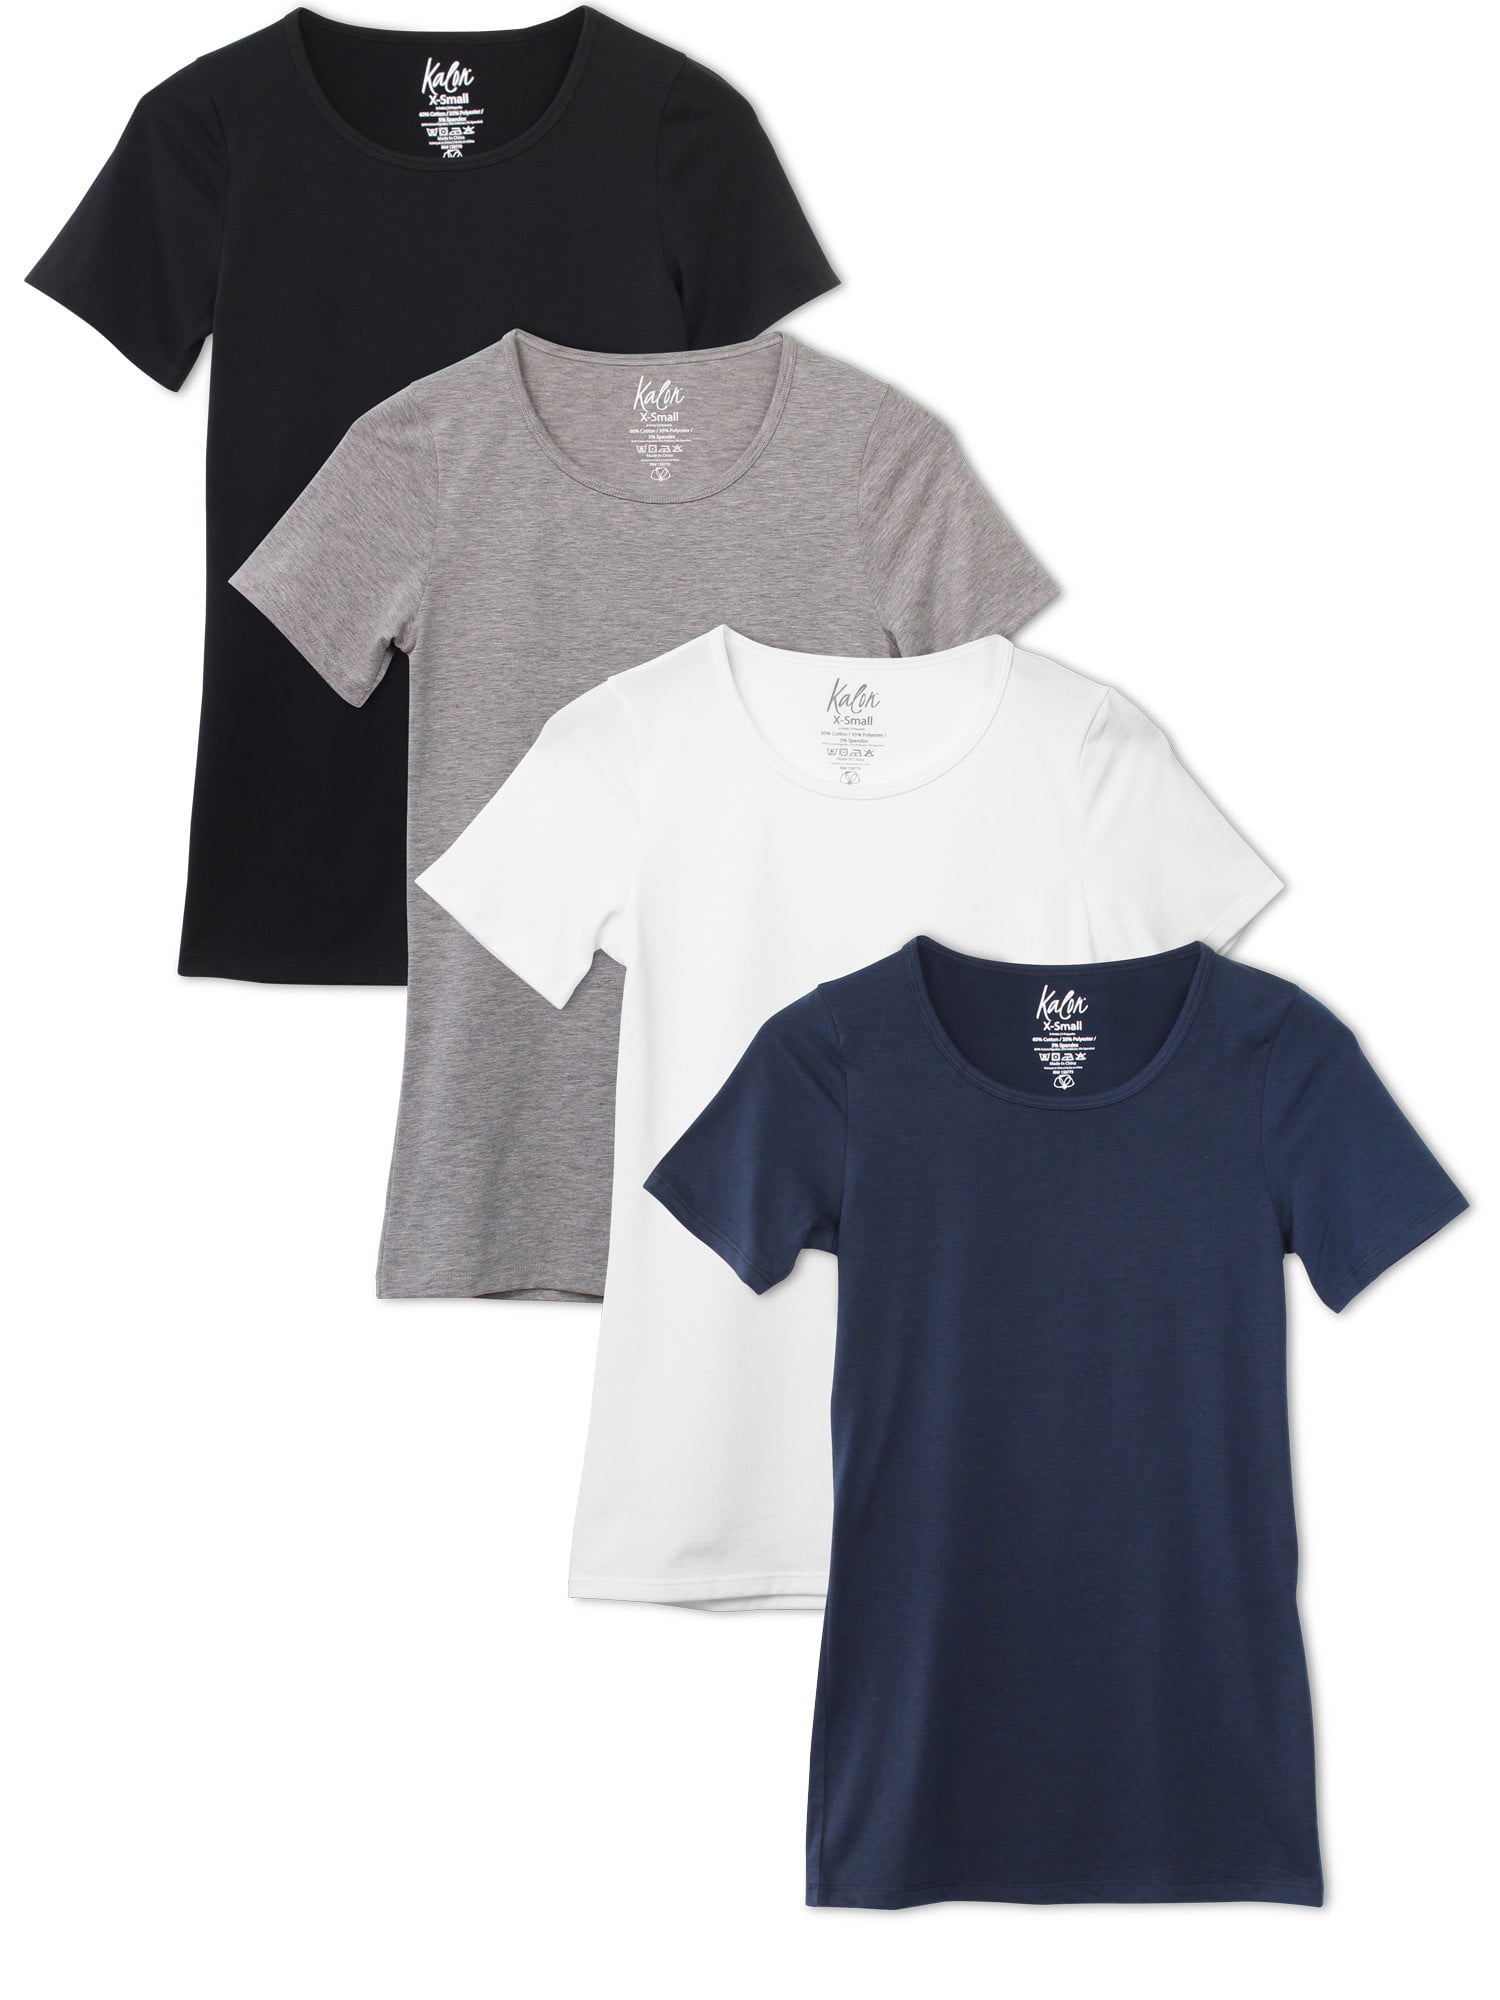 Kalon Women's 4-Pack Scoop Neck T-Shirt Base Layer